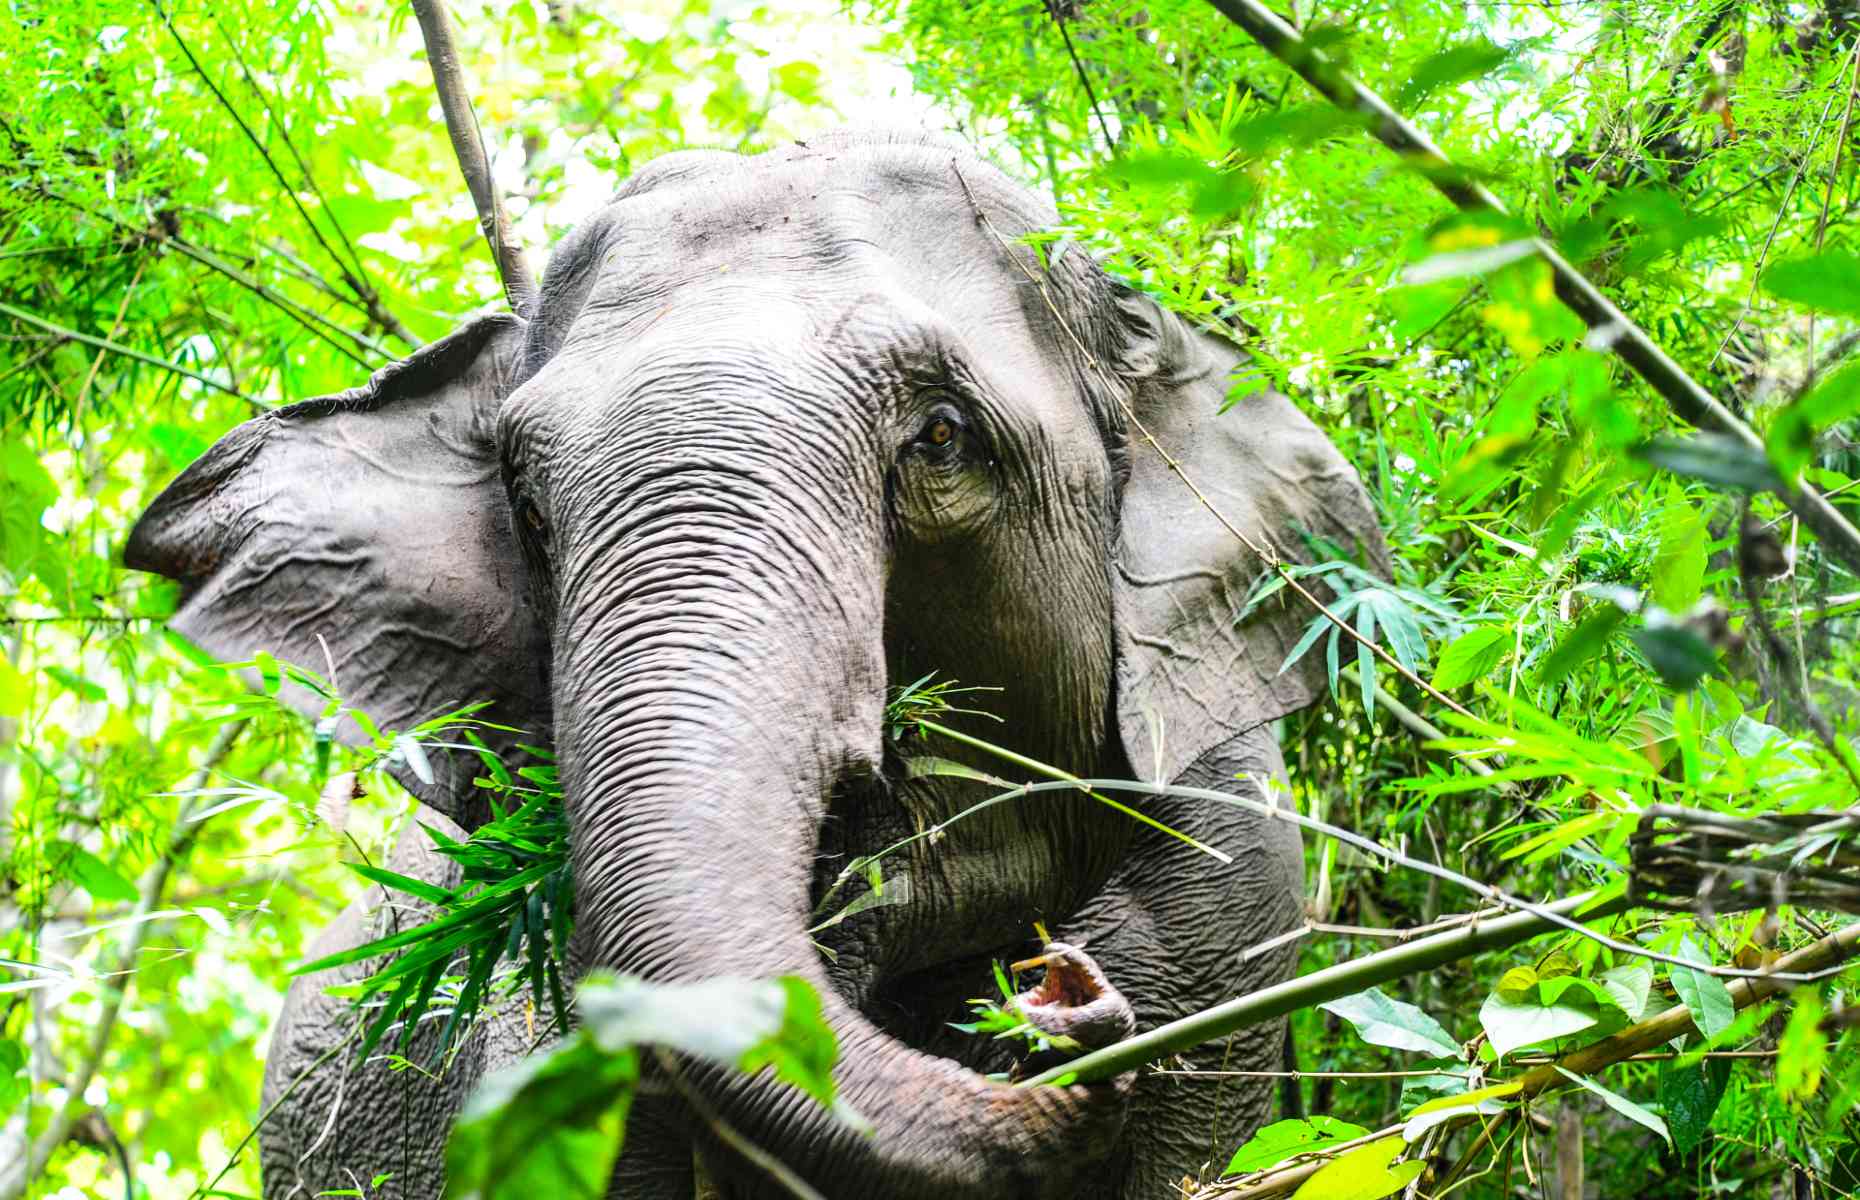 Om Koi elephant in the jungle, Thailand (Image: Mark Stratton)